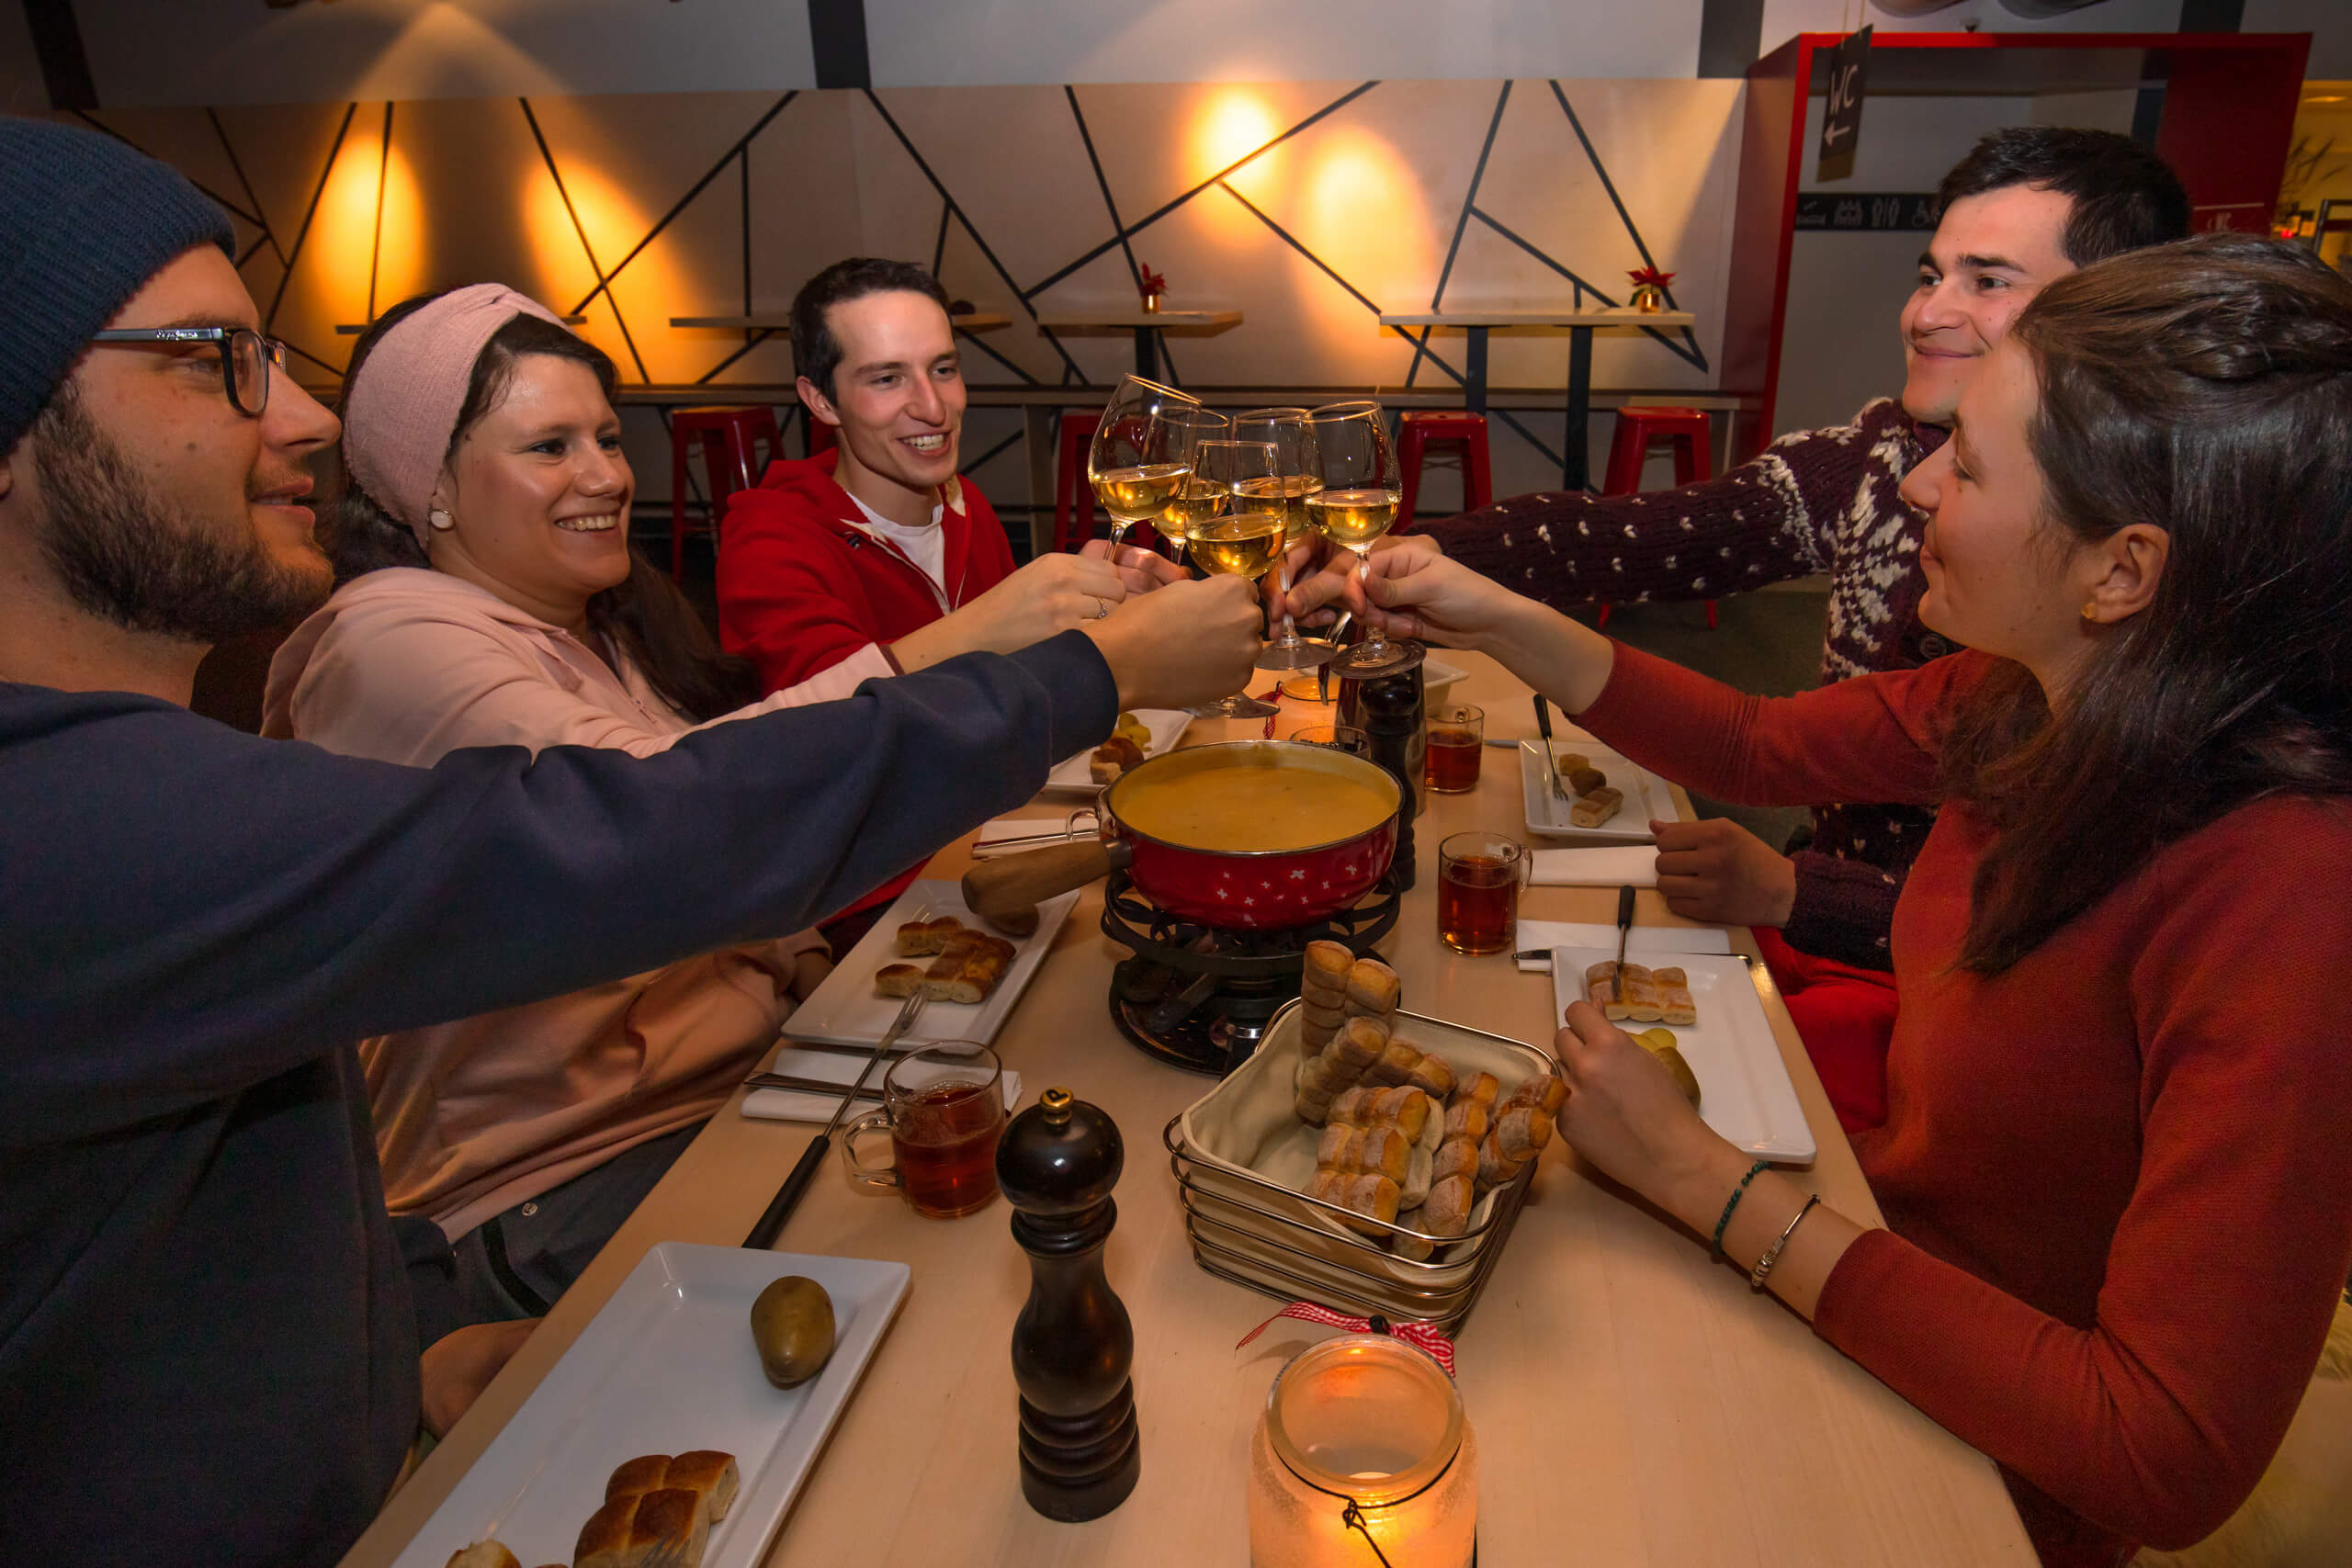 niederhorn-sternenschlitteln-fondue-nachtessen-gertraenke